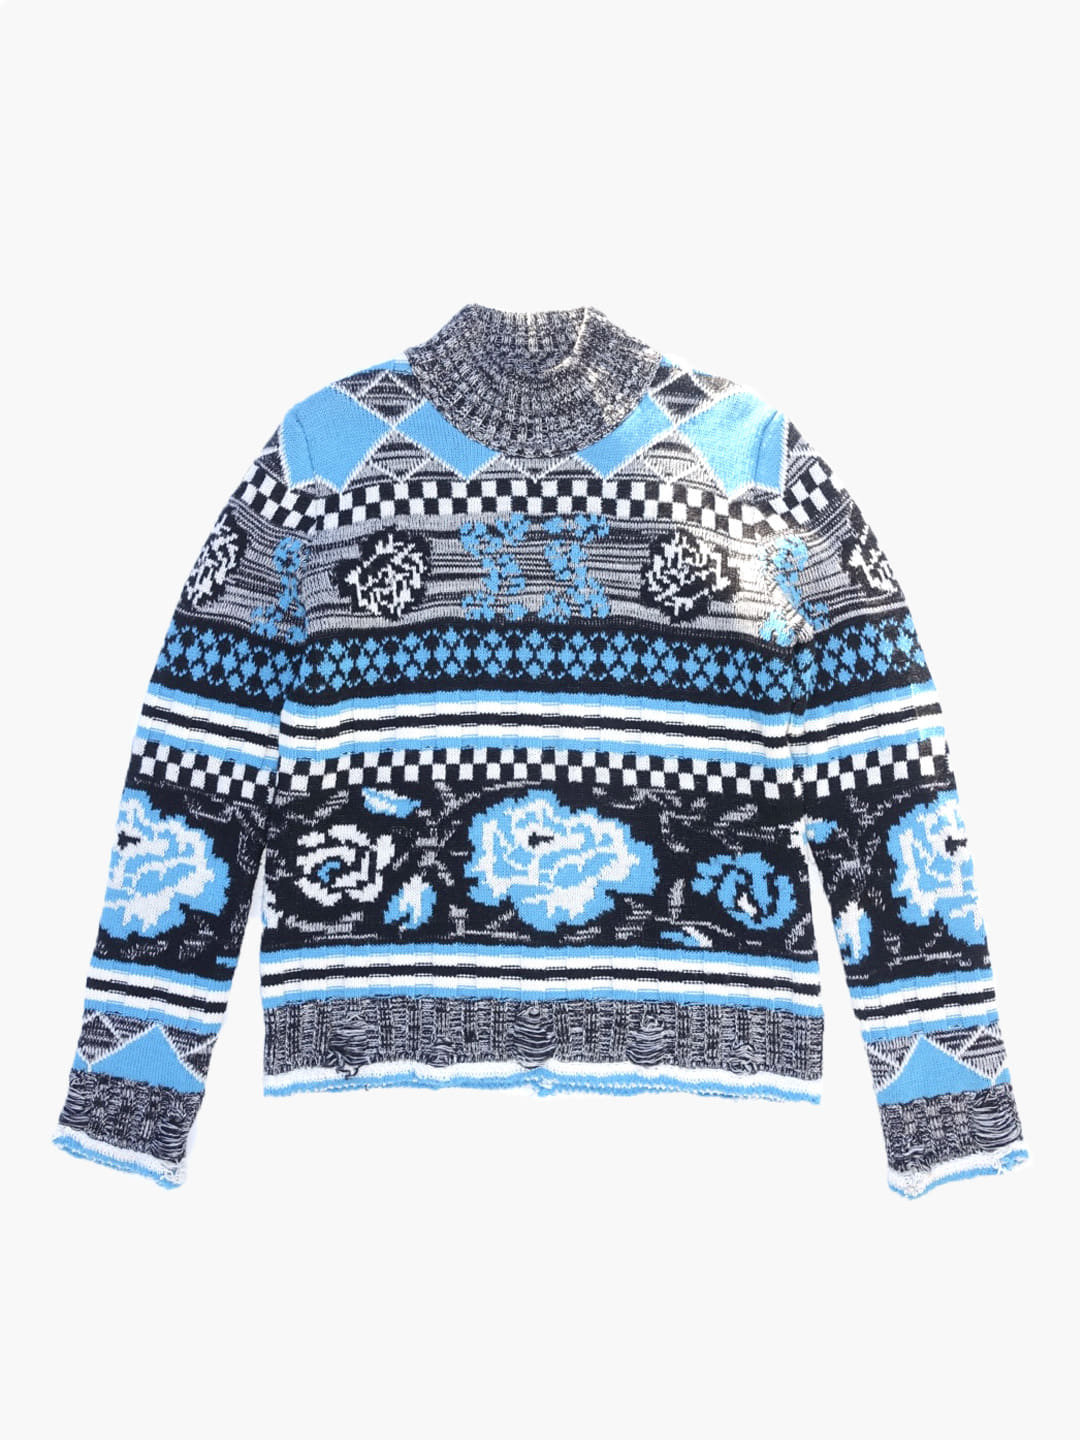 MSGMPattern sweater